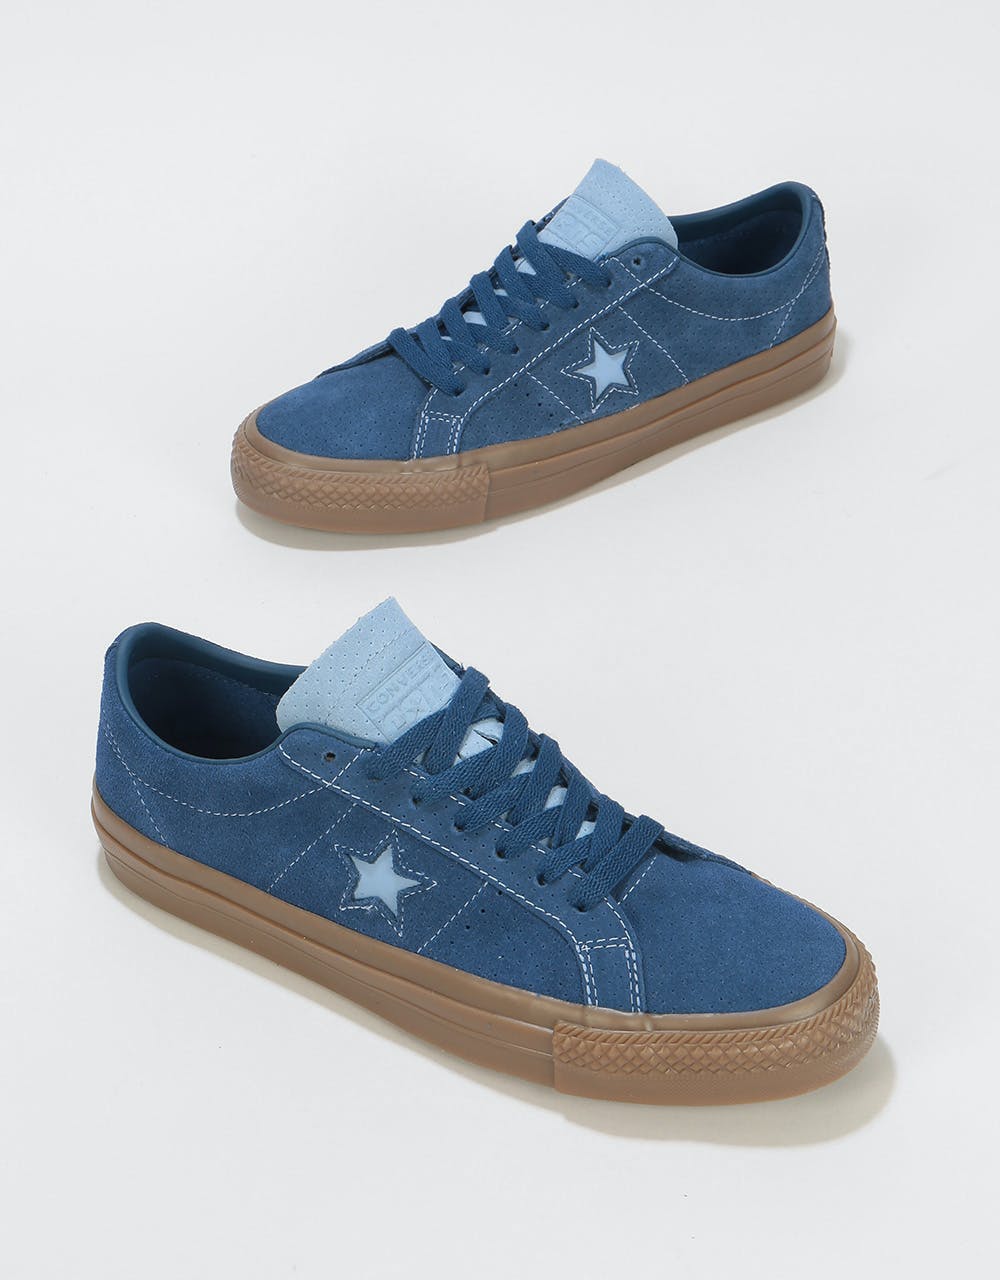 Converse One Star Pro Ox Skate Shoes - Navy/Indigo Fog/Brown